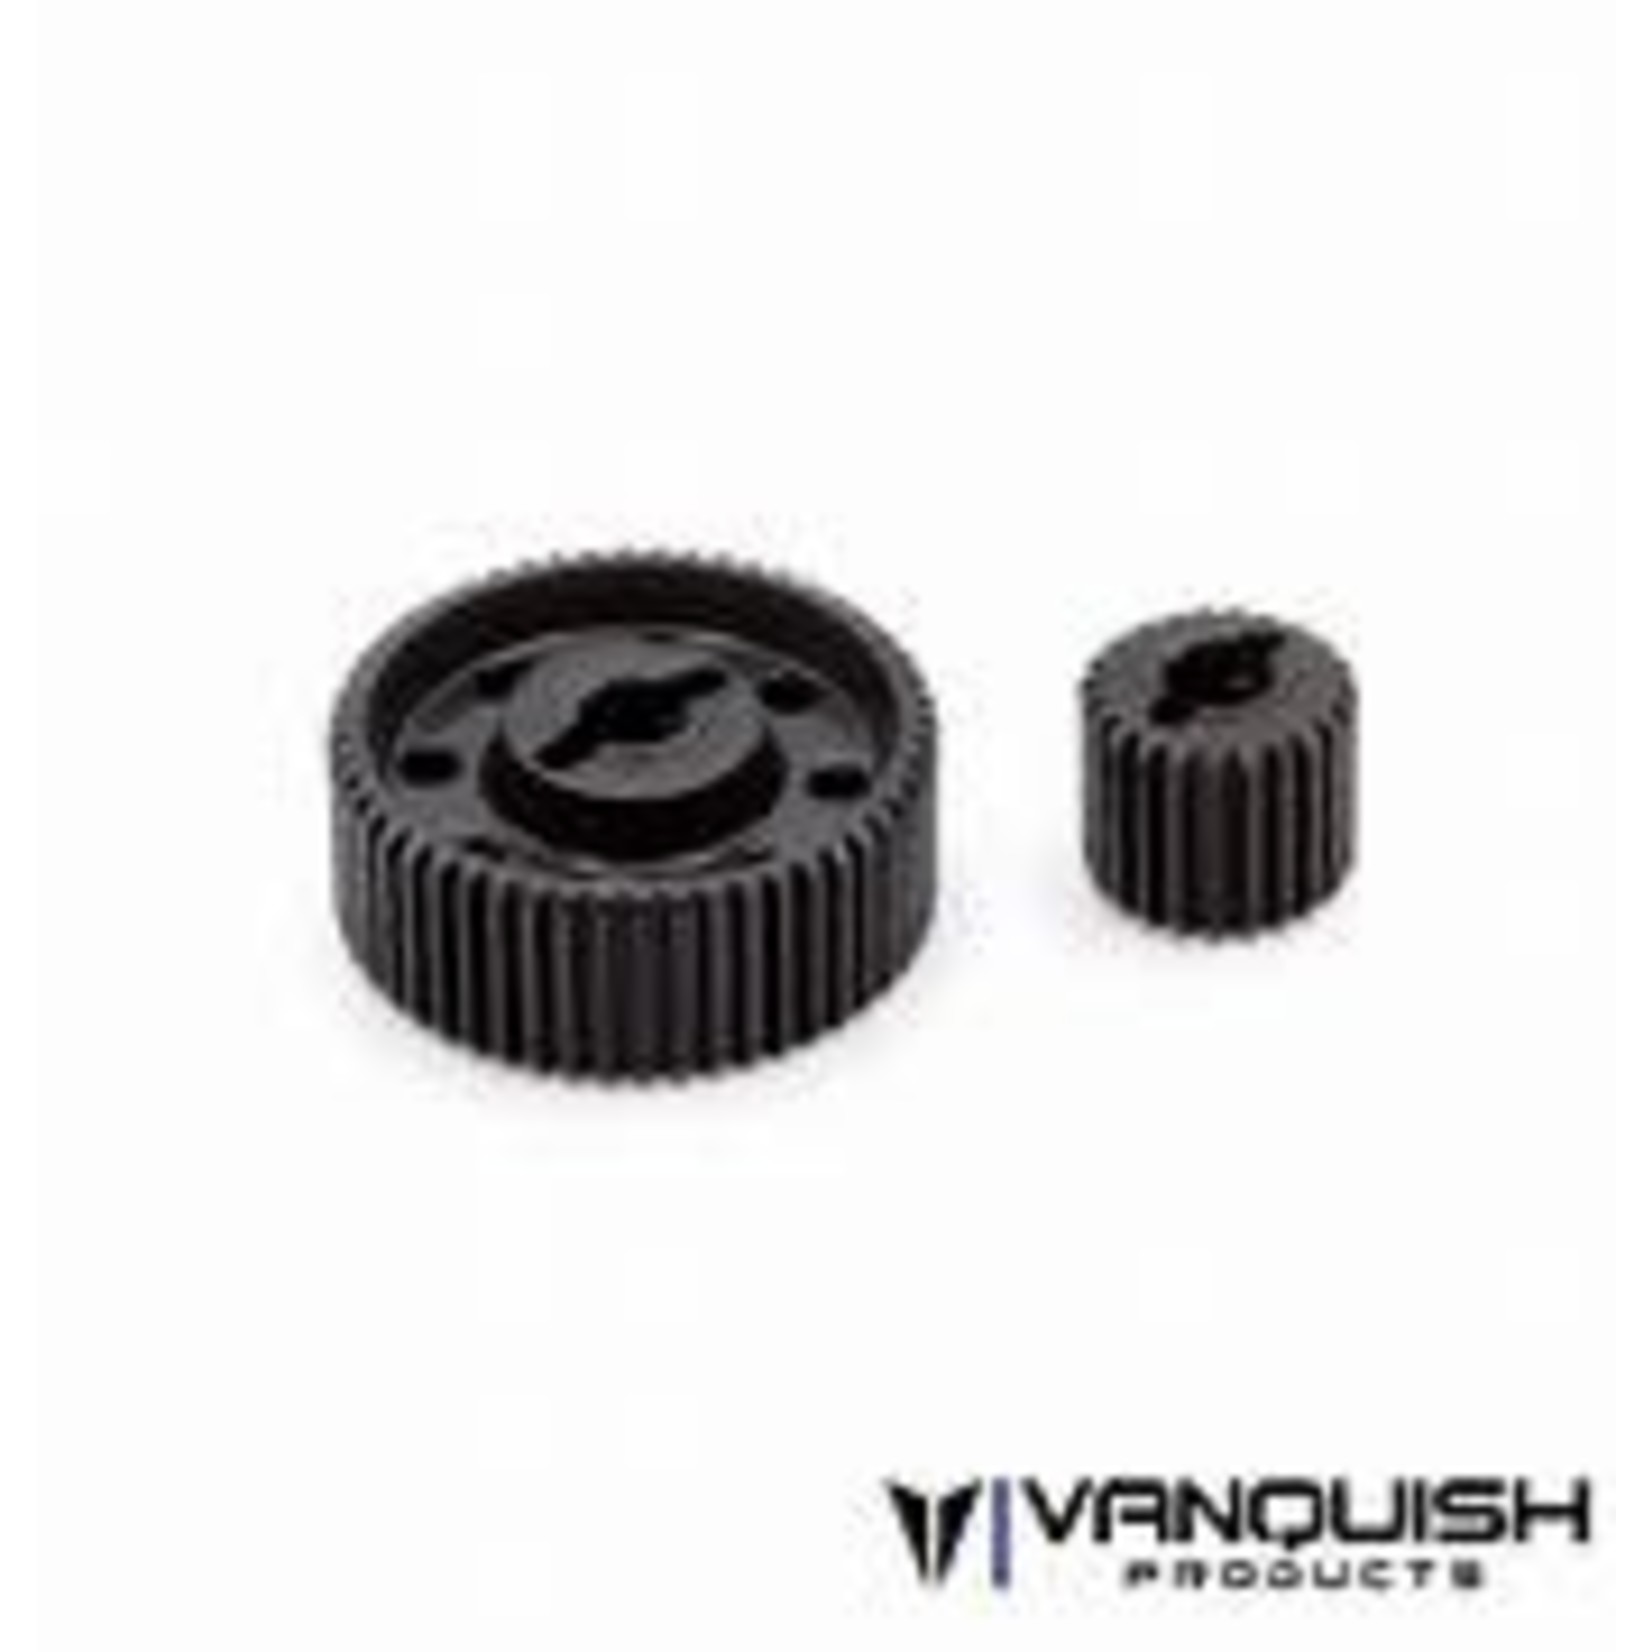 Vanquish Products VFD Machined Front Gear Set